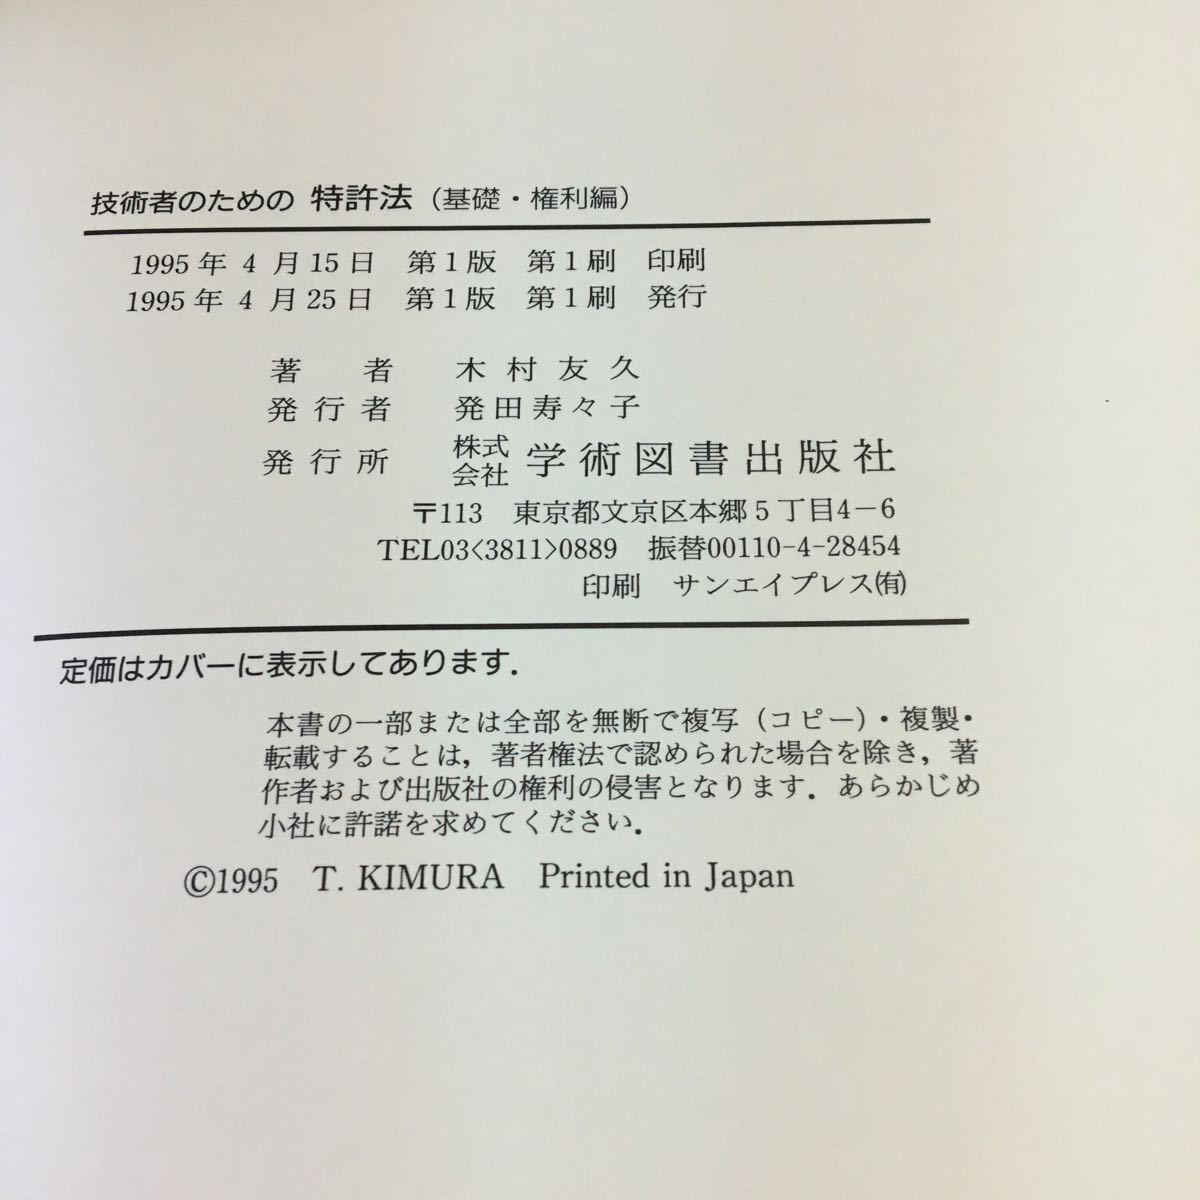 S7g-016 技術者のための 特許法 （基礎・権利編）木村友久 特許法理解のために カバーなし 1995年4月25日 第1版 第1刷発行_画像7